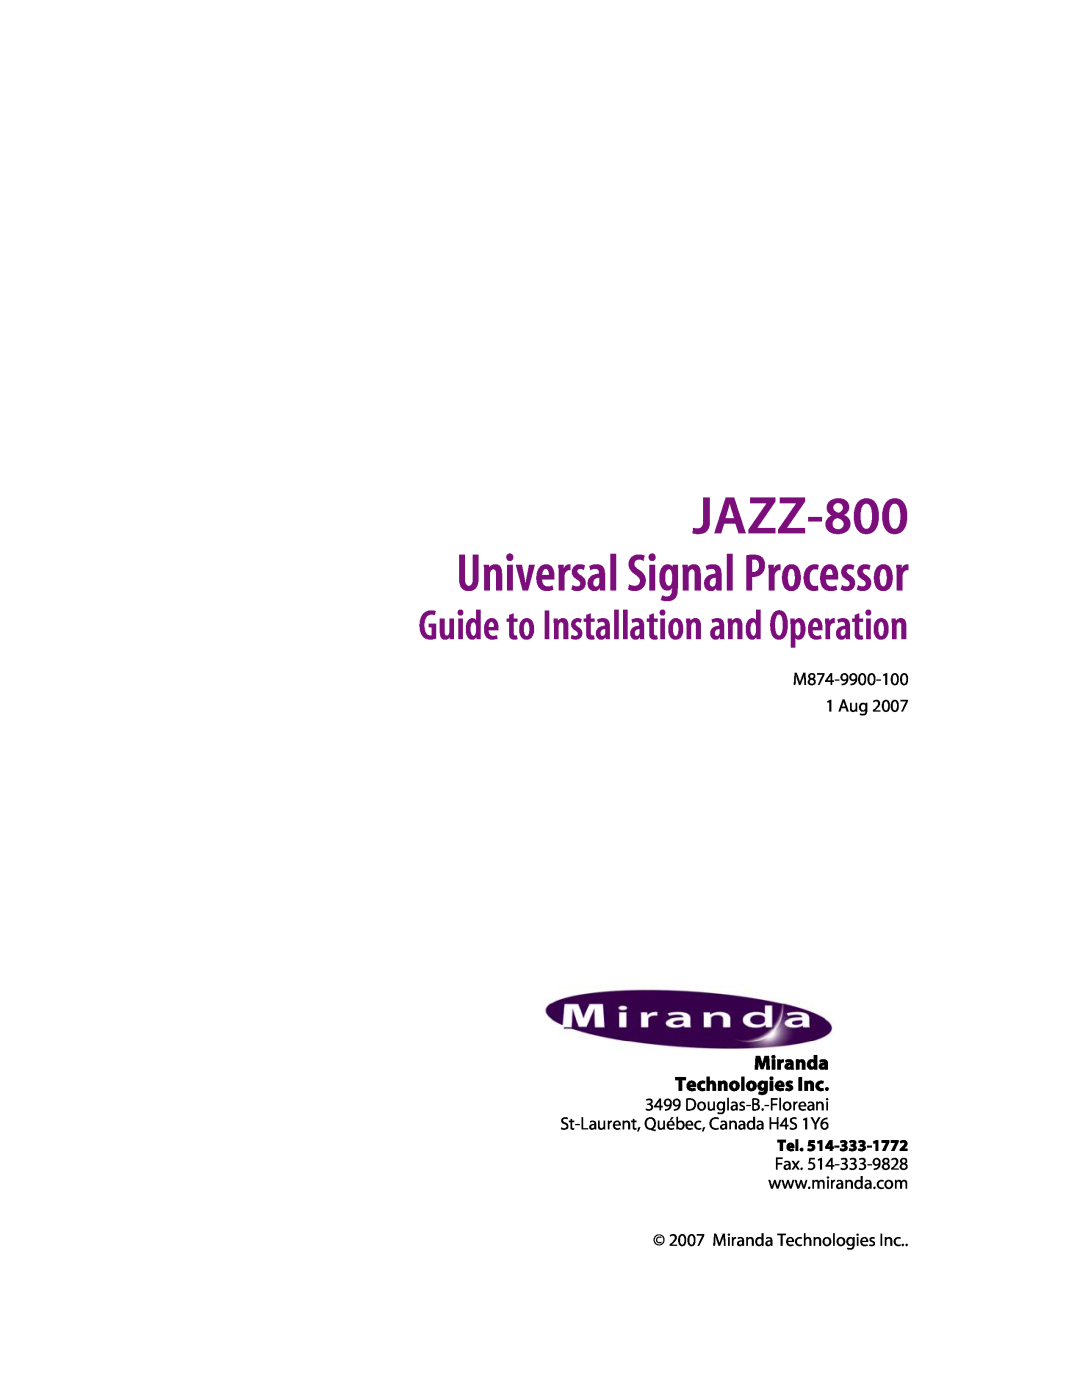 Miranda Camera Co JAZZ-800 manual Universal Signal Processor, Guide to Installation and Operation, Tel 